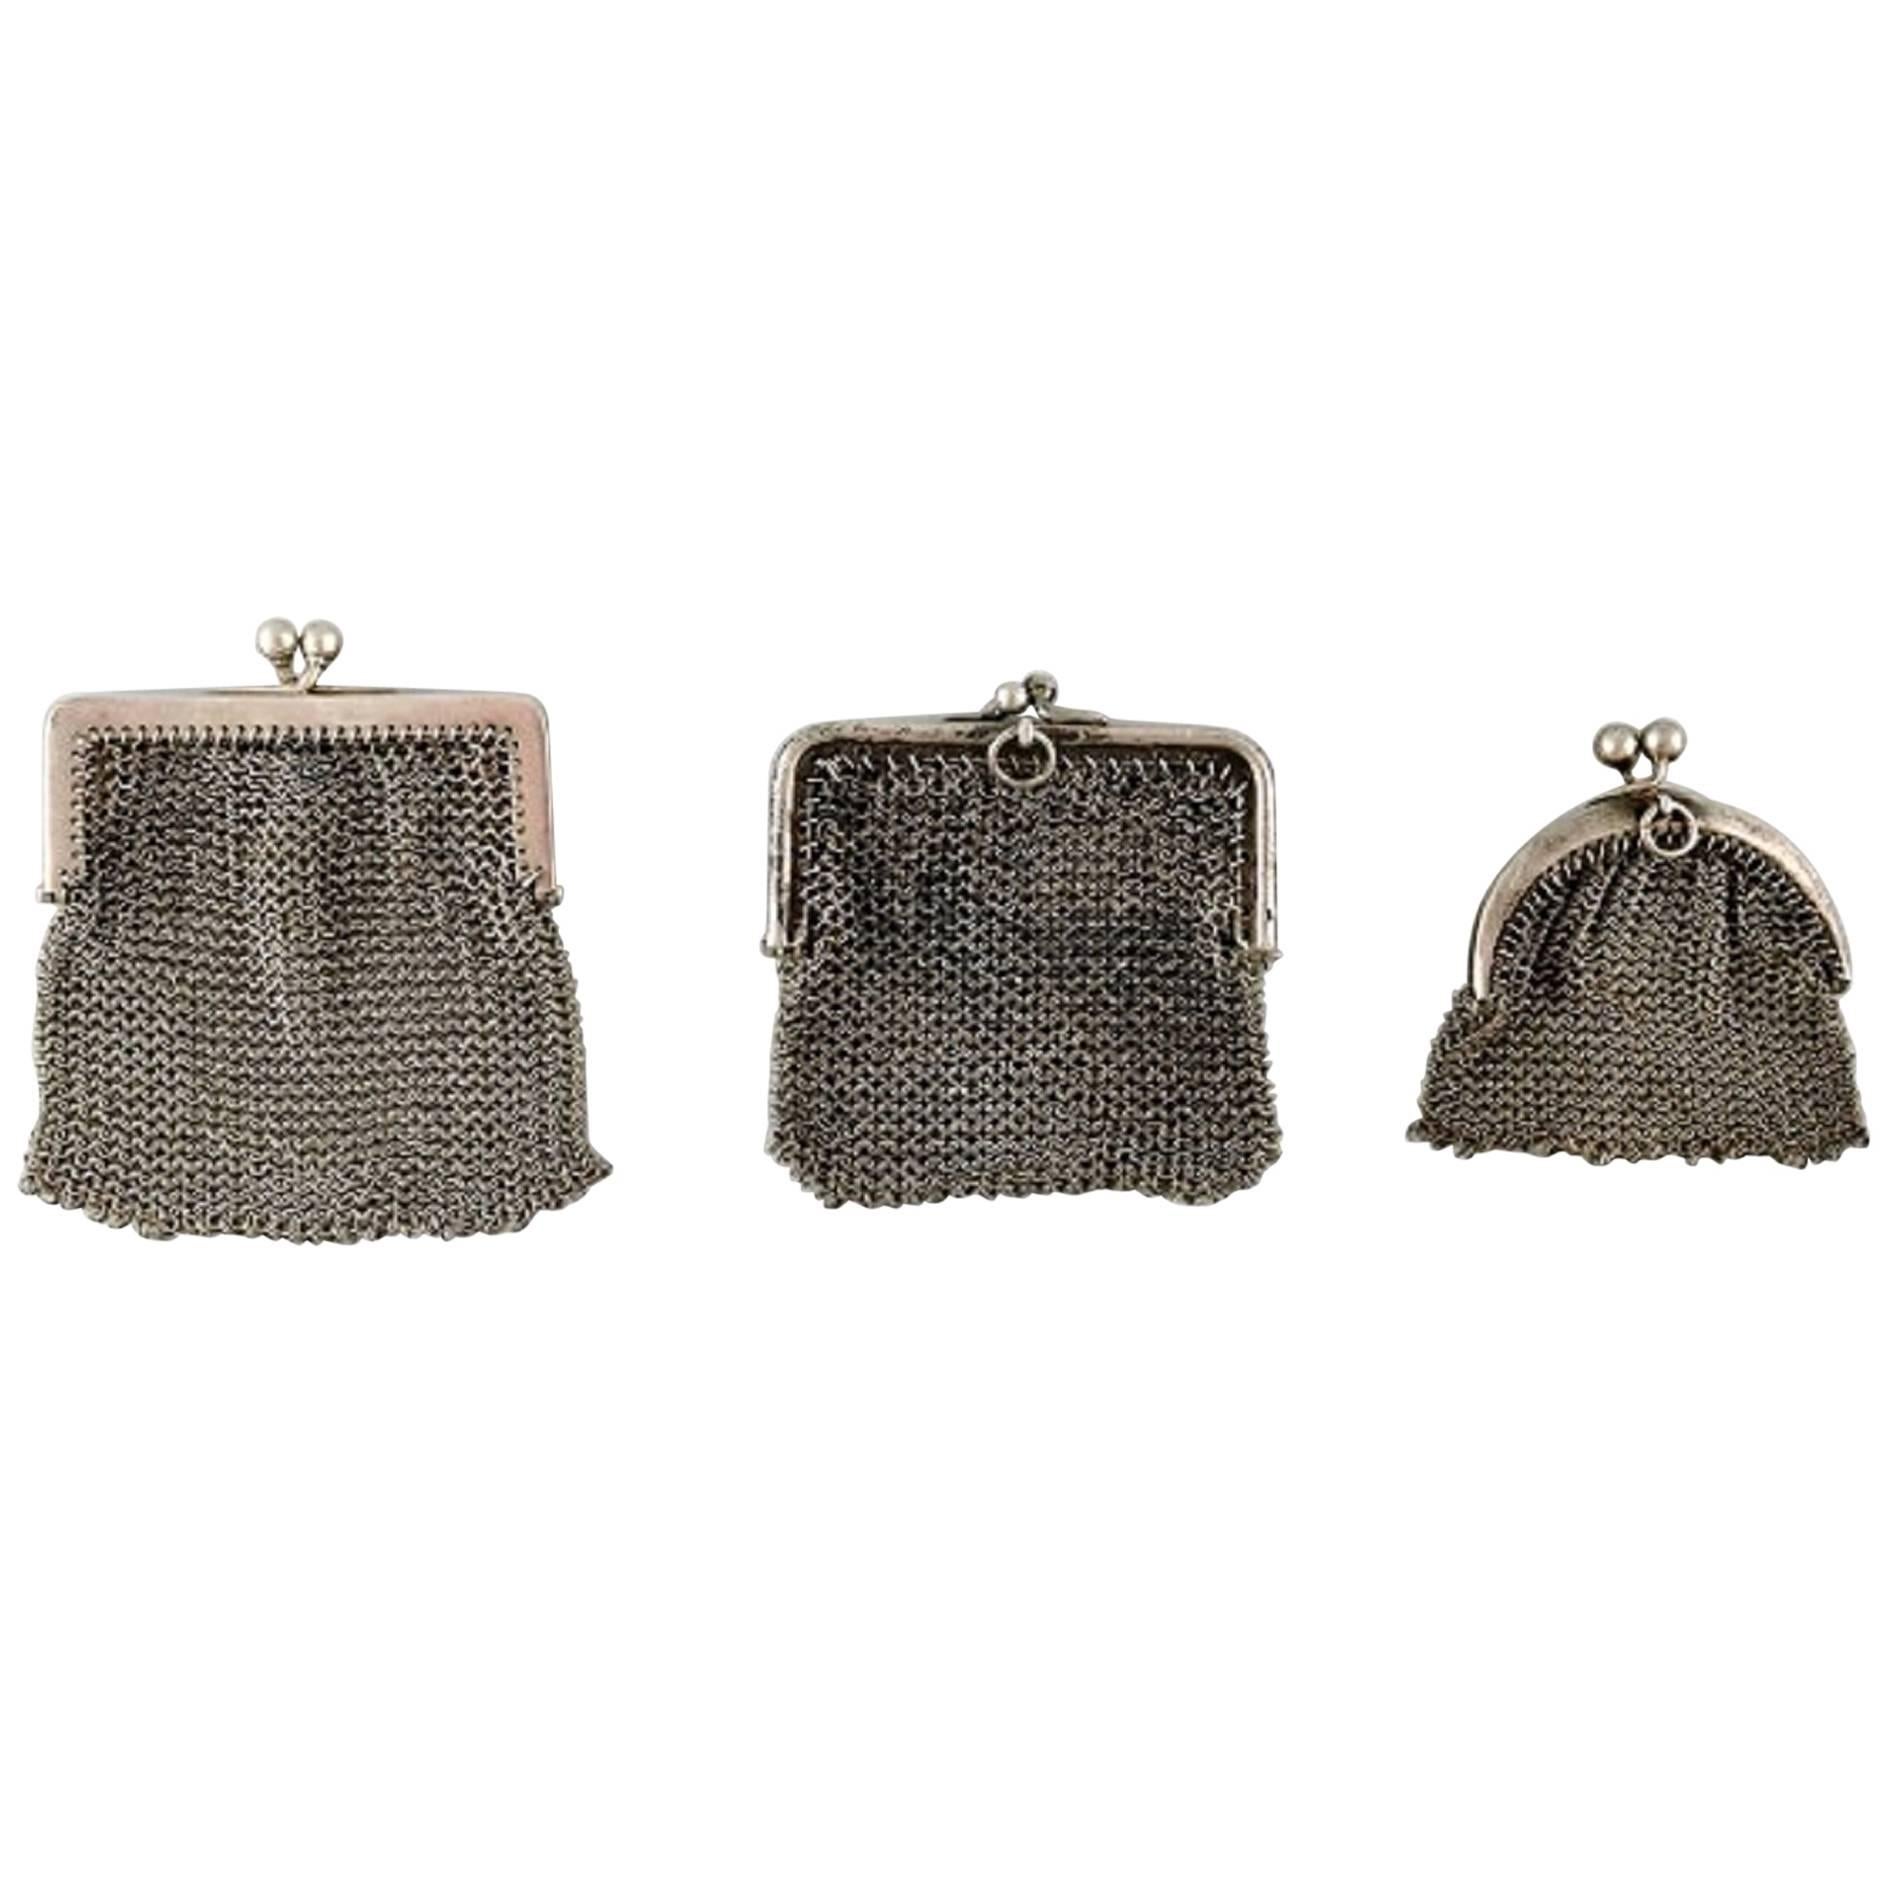 Three Small Ladies Silver Purses, circa 1900, Knitted Bag